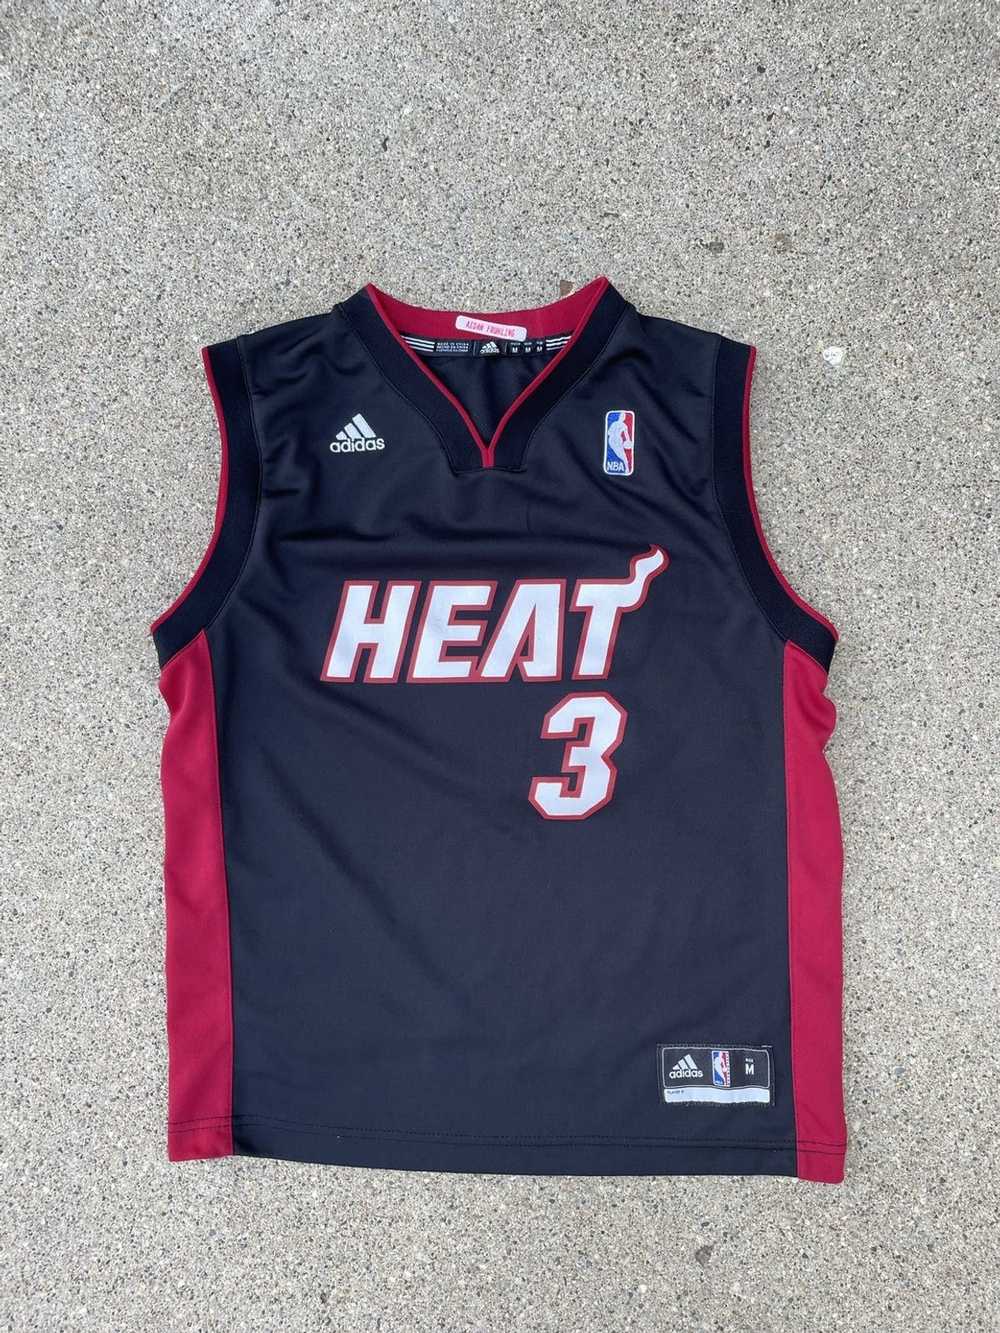 Homage NBA Jam XL T Shirt MIAMI HEAT dwyane Wade | Udonis Haslem Heat Store  Exc